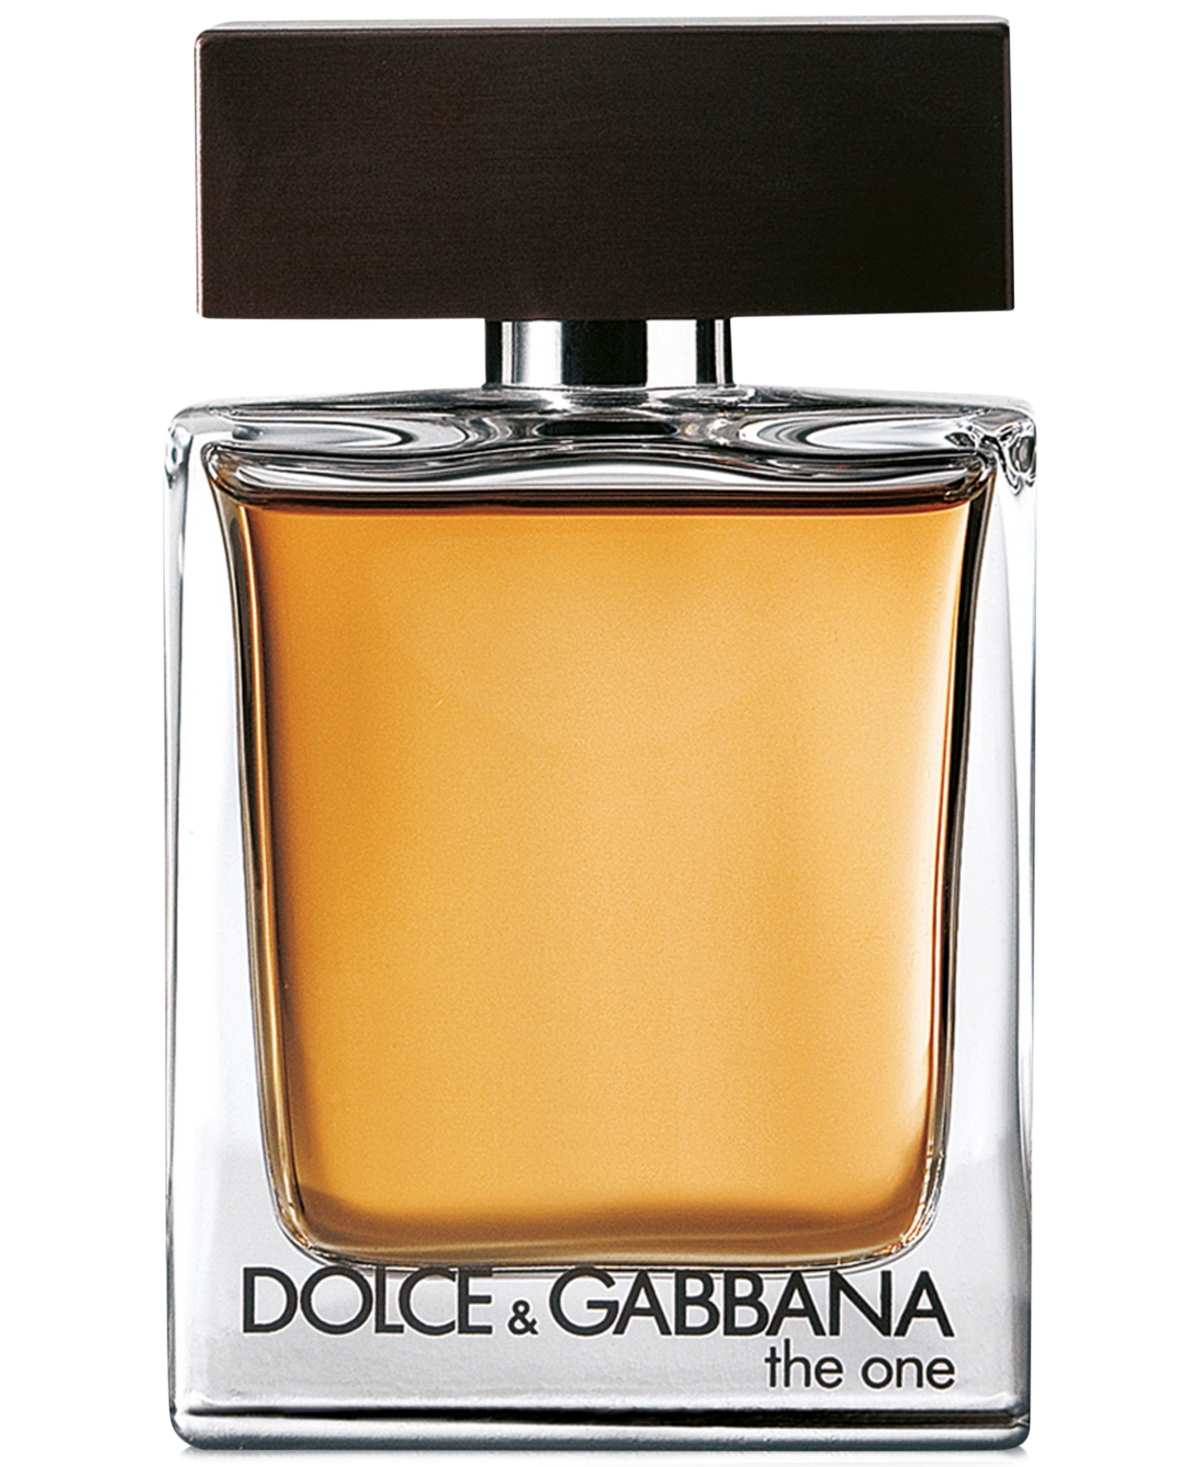 EAN 3423473021230 - Dolce & Gabbana Men's The One Eau de Toilette Spray ...